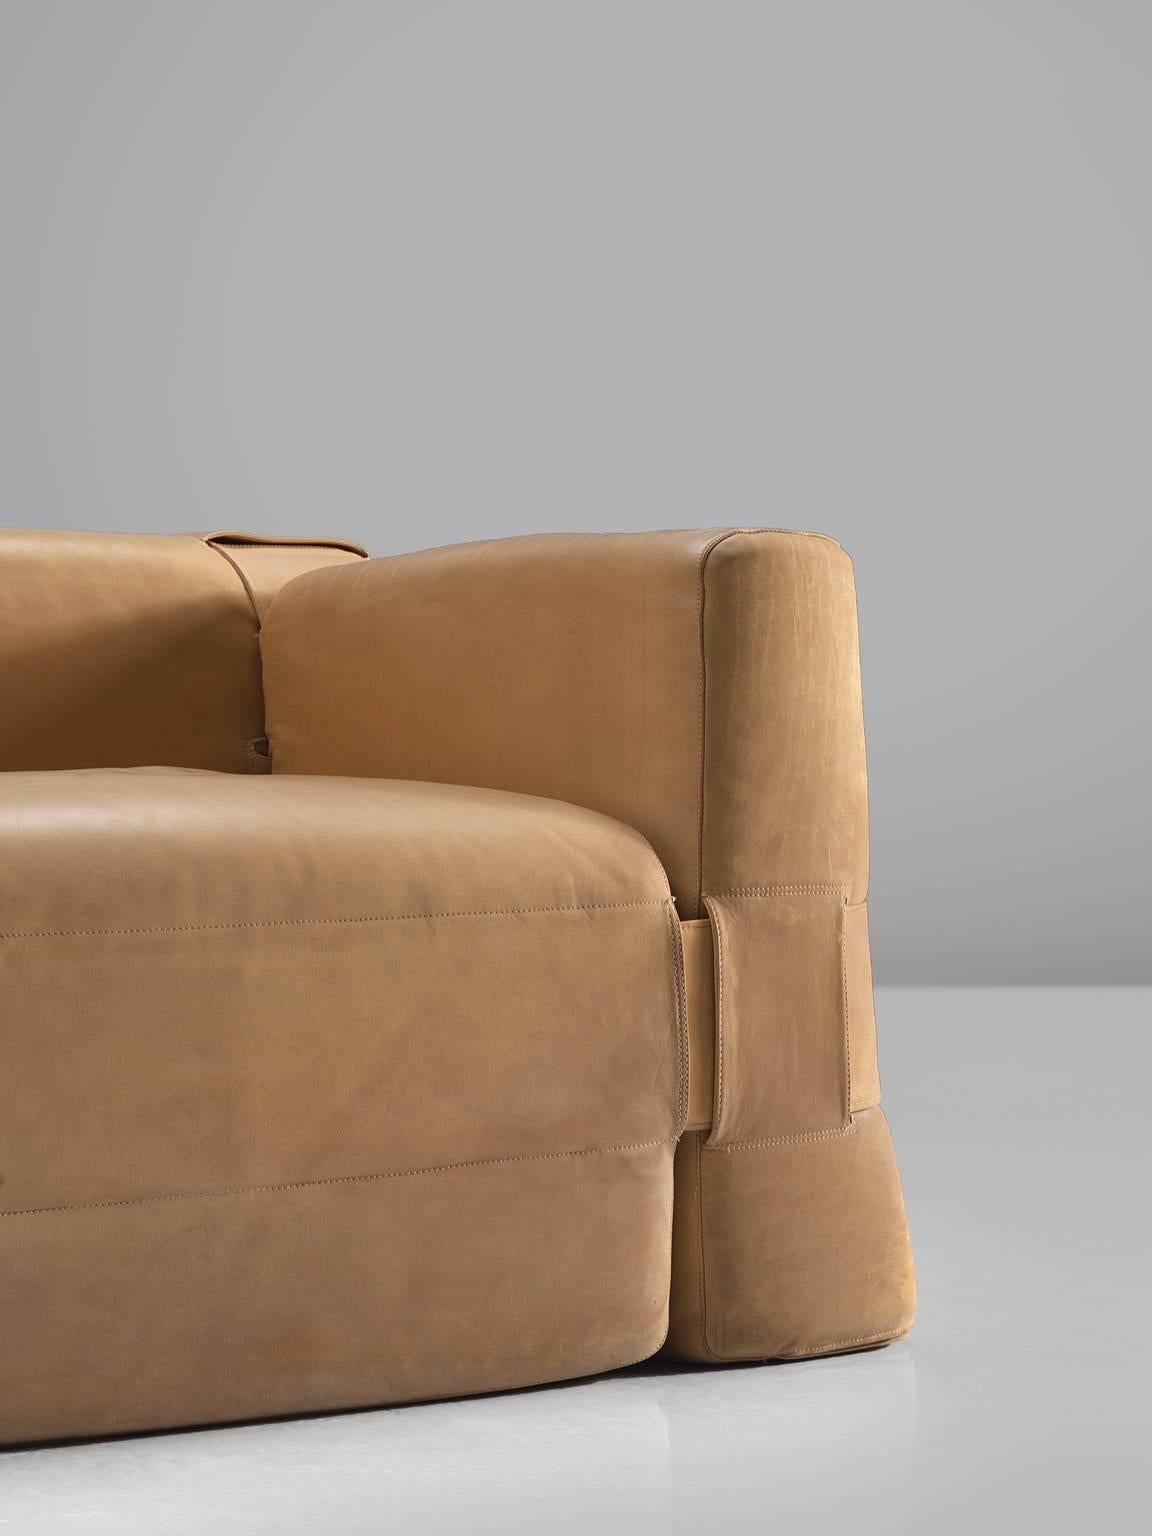 Mid-Century Modern Mario Bellini Modular Sofa for Cassina